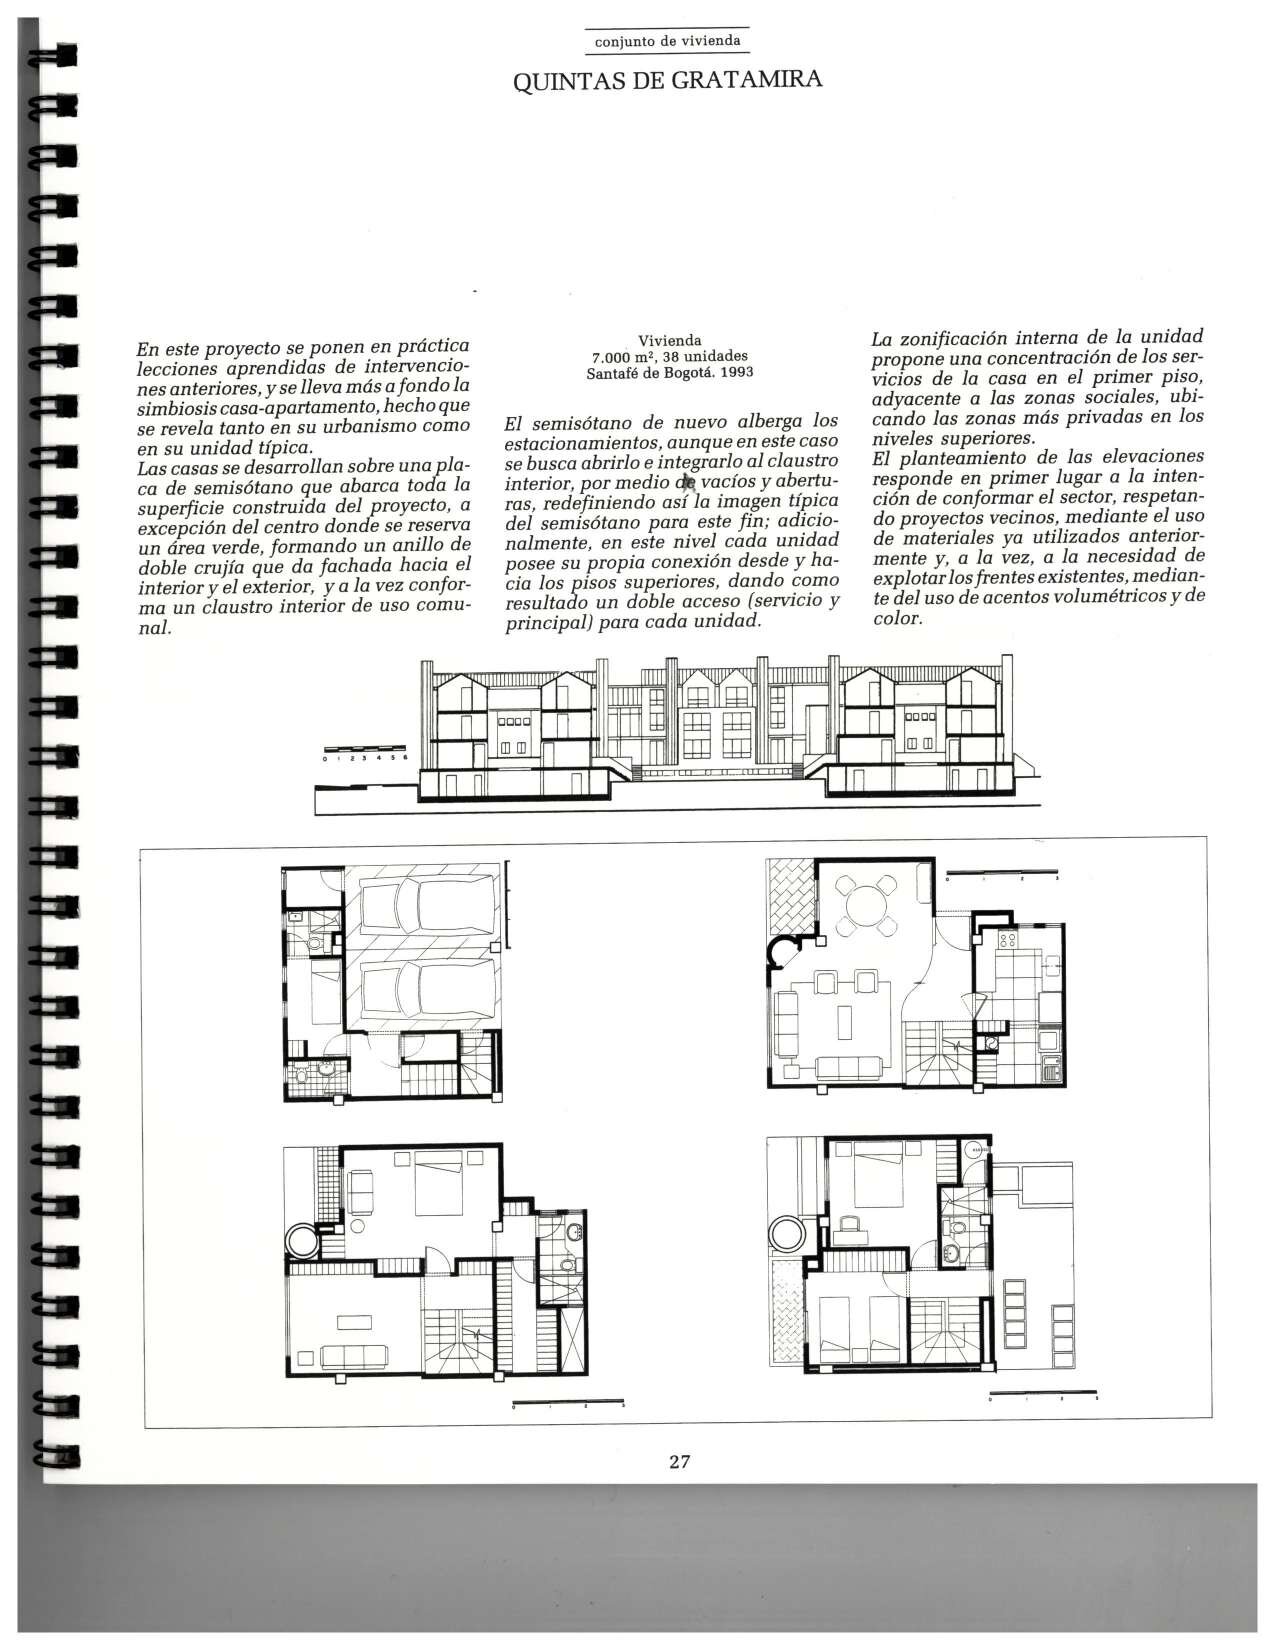 1995_Obra Contexto Urbano_Revista PROA_compressed_page-0027.jpg